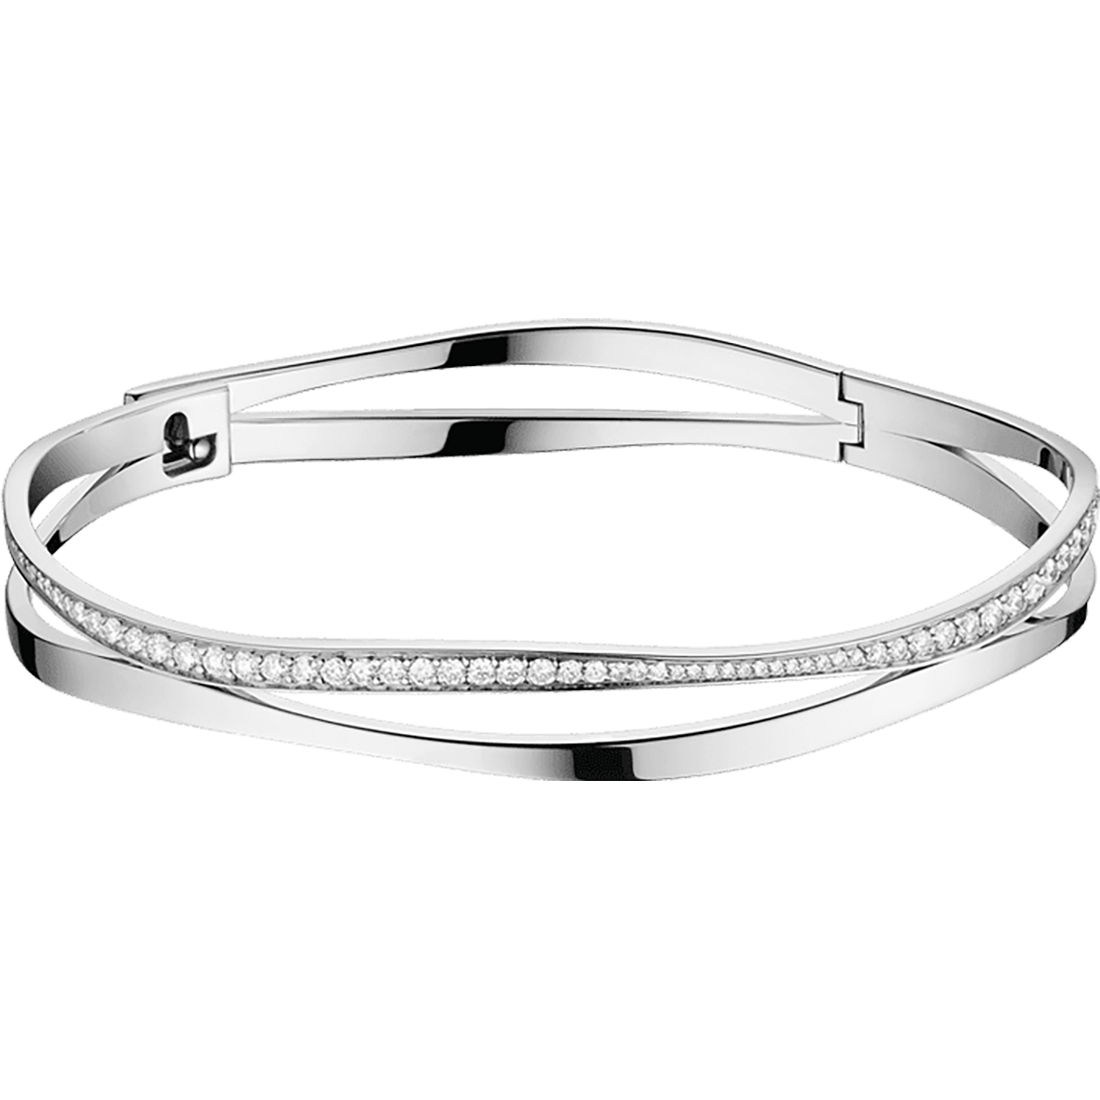 Ladymatic Bracelet, 18K white gold, Diamonds - B604BC0100102